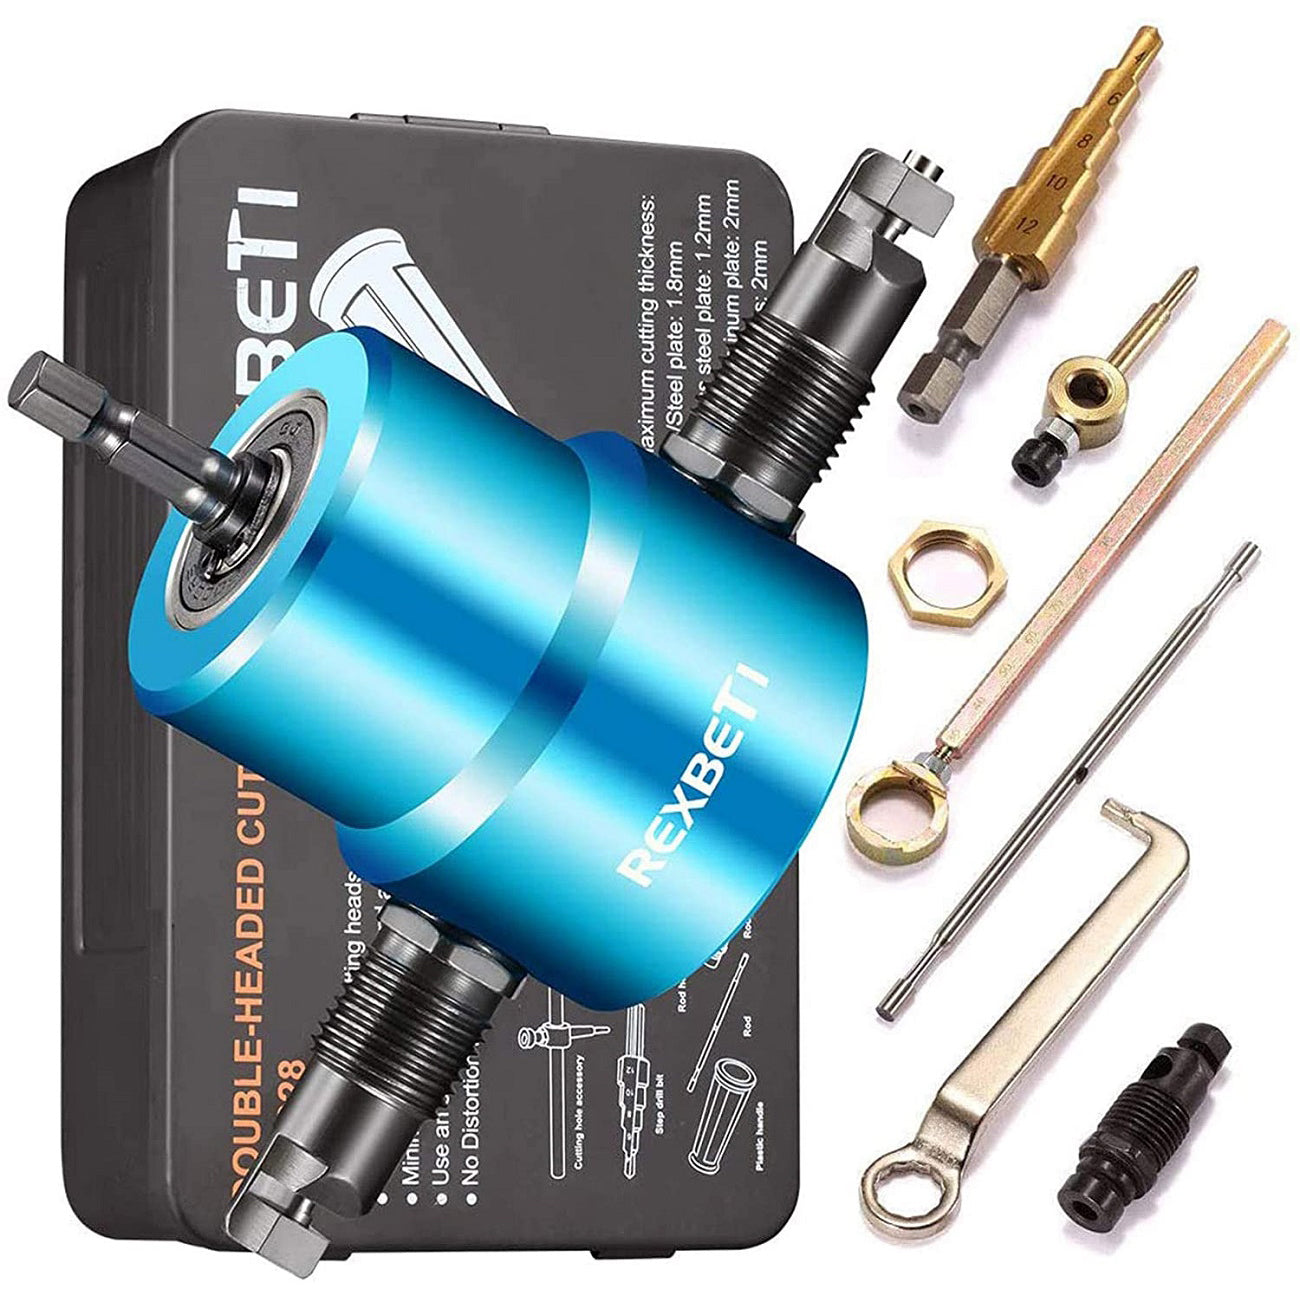 EOTVIA Nibbler Metal Cutter,Drill Attachment Metal Nibbler Tool